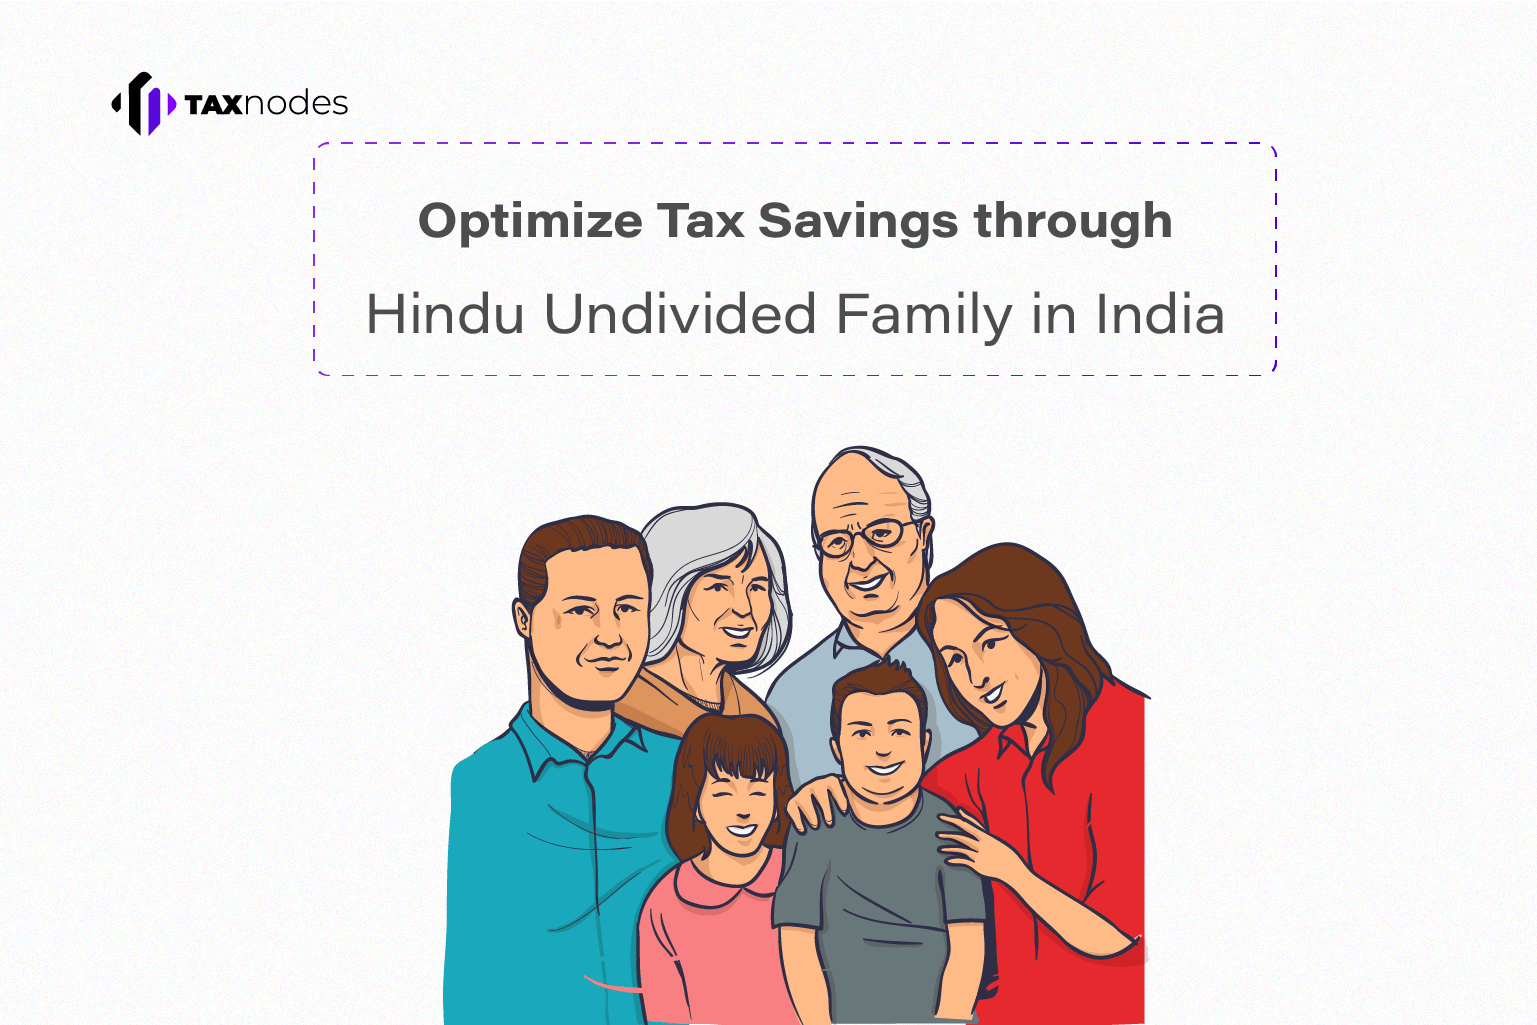 Tax Savings through Hindu Undivided Family (HUF)